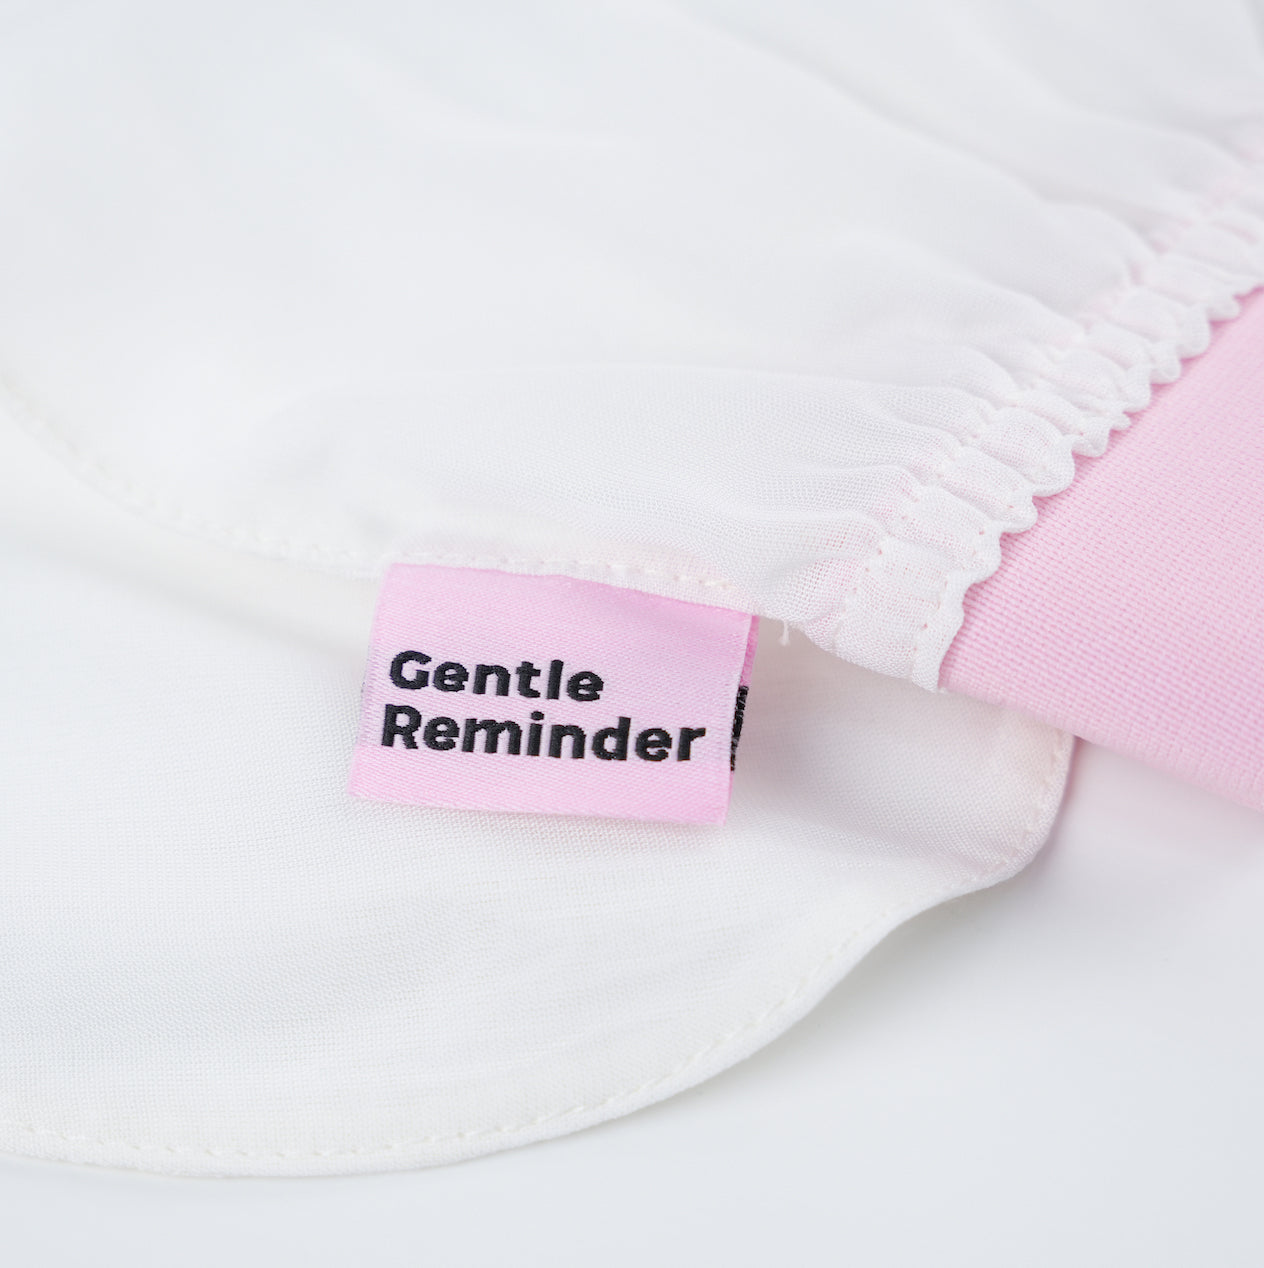 gentle reminder exfoliating glove product